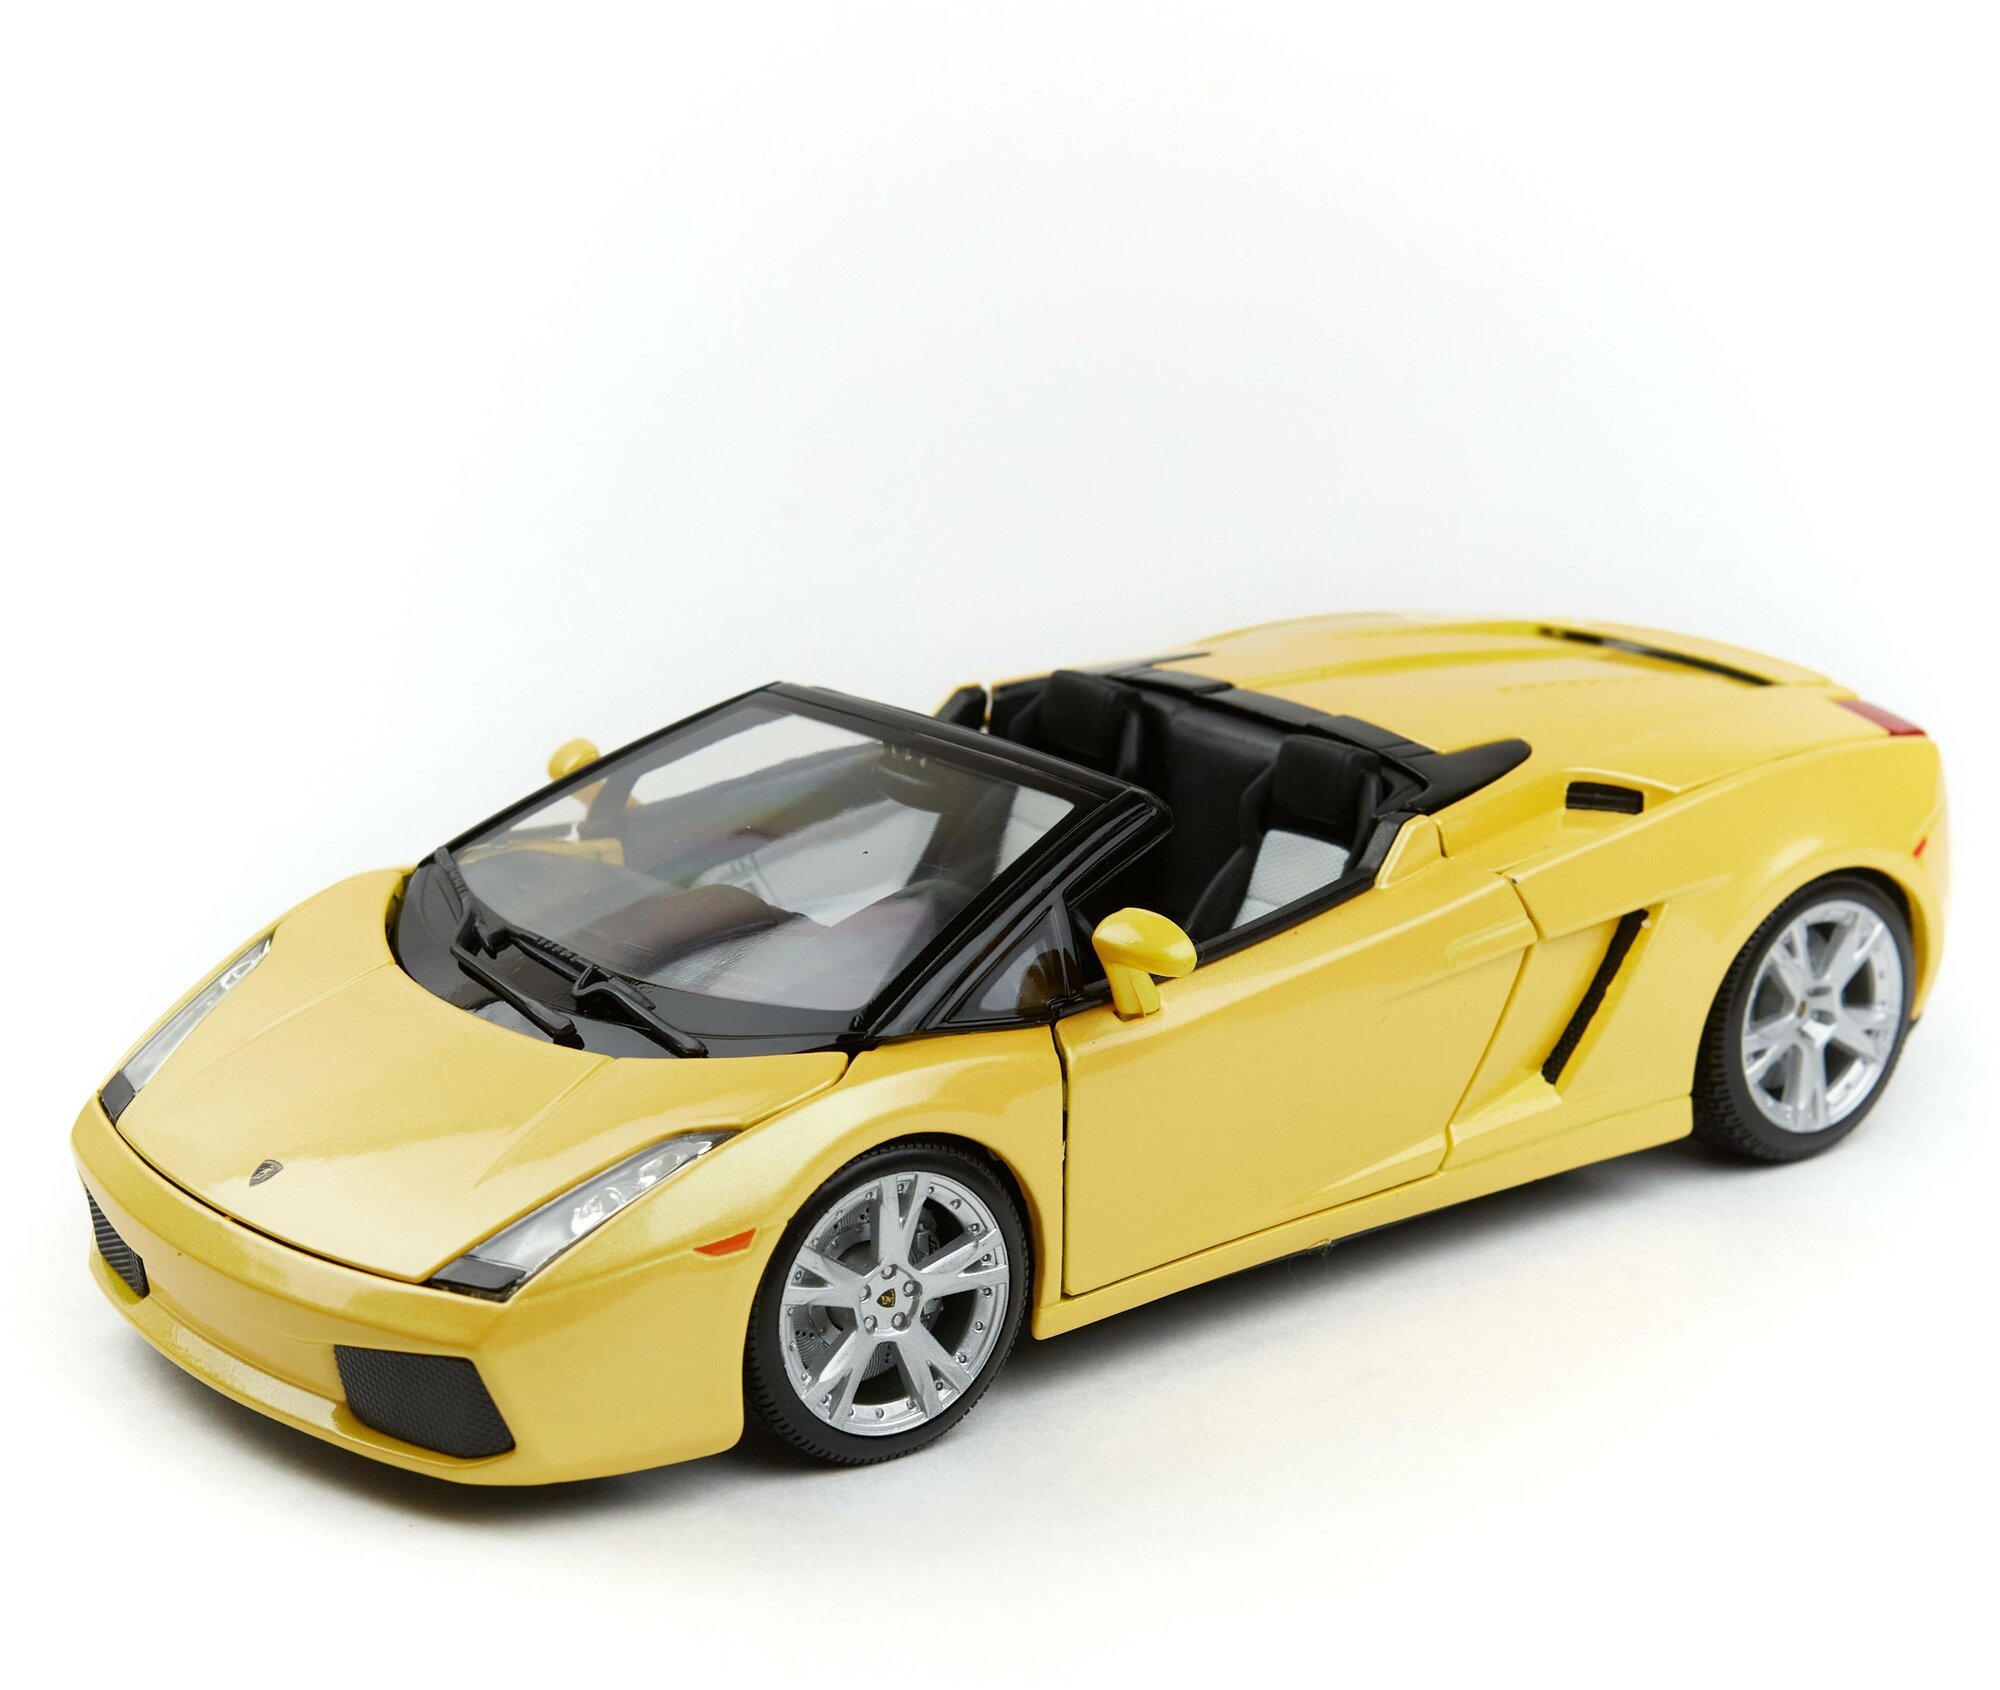 Bburago Коллекционная машинка 1:18 Lamborghini Gallardo Spyder, 18-12016, желтая - фото №1